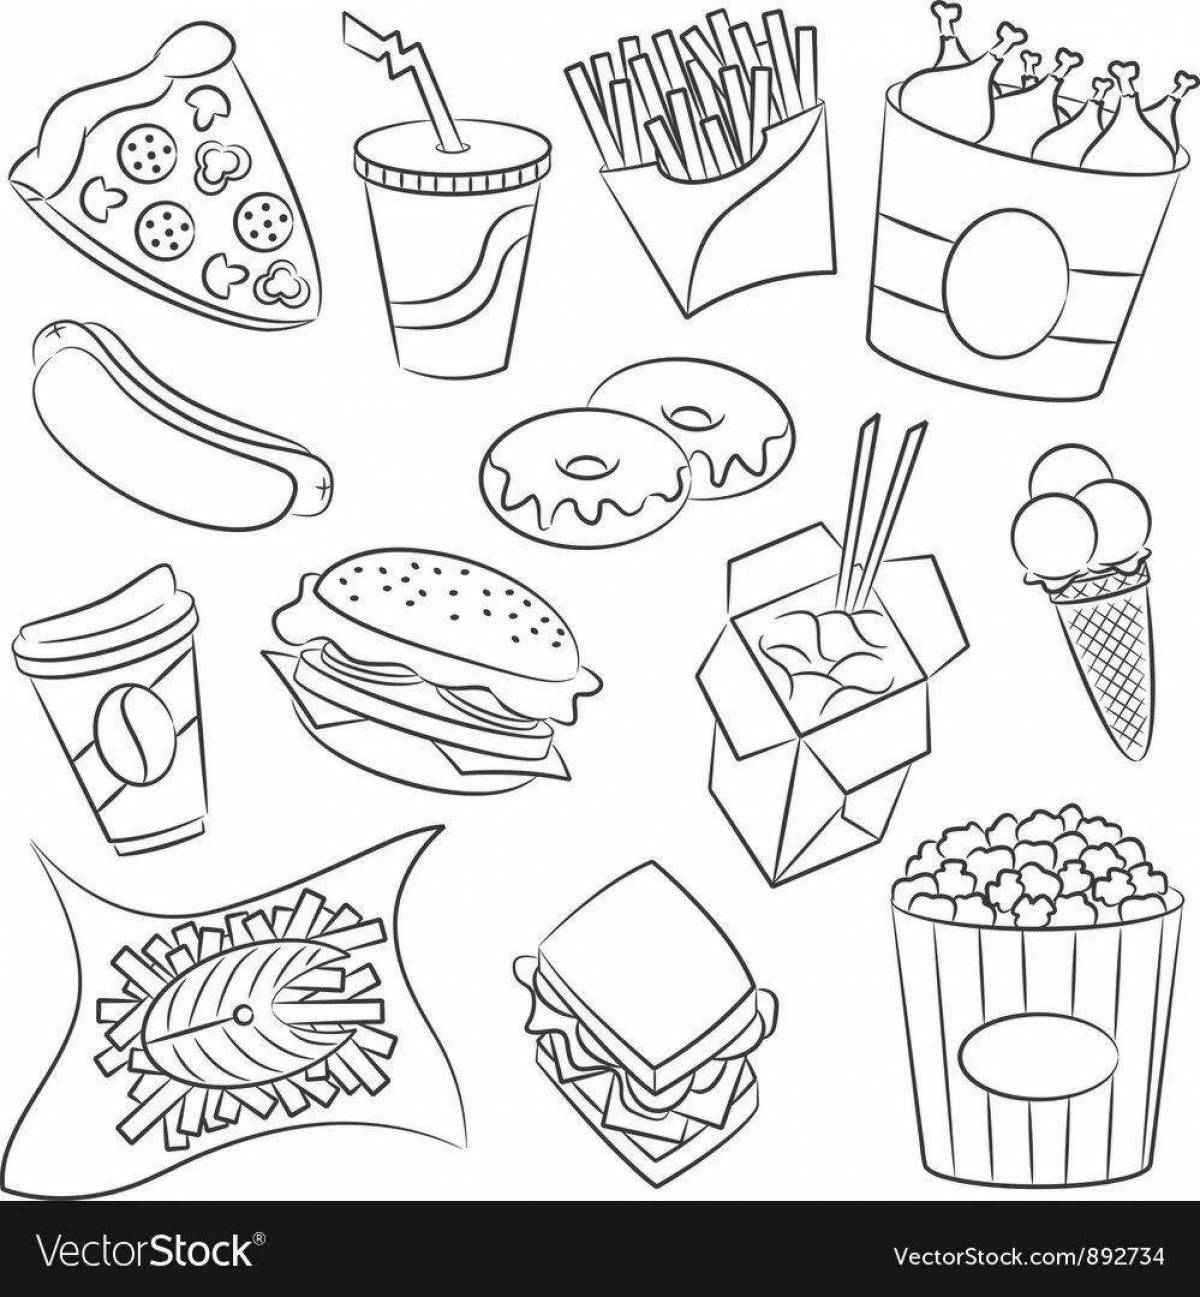 Sweet lol food coloring page